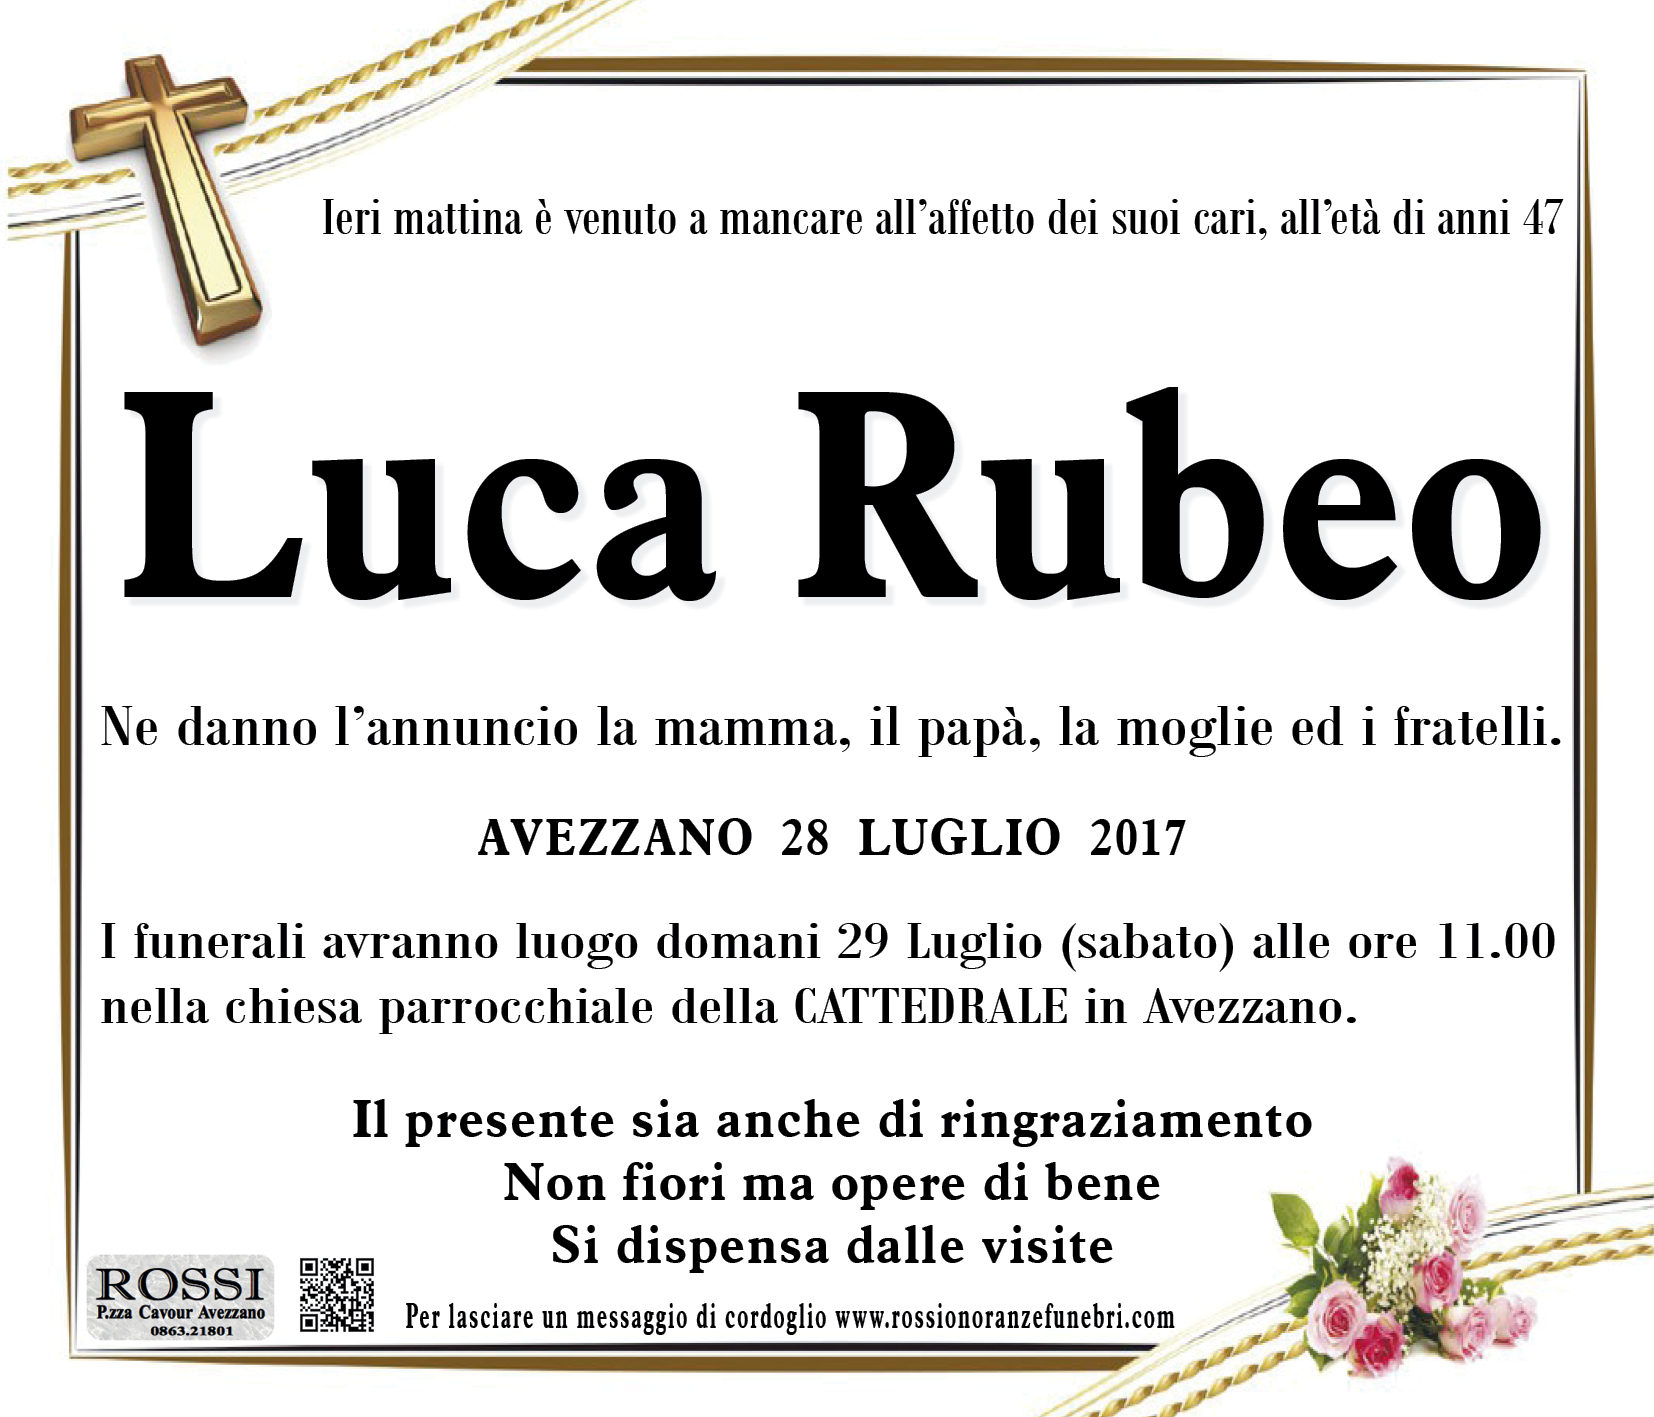 Luca Rubeo